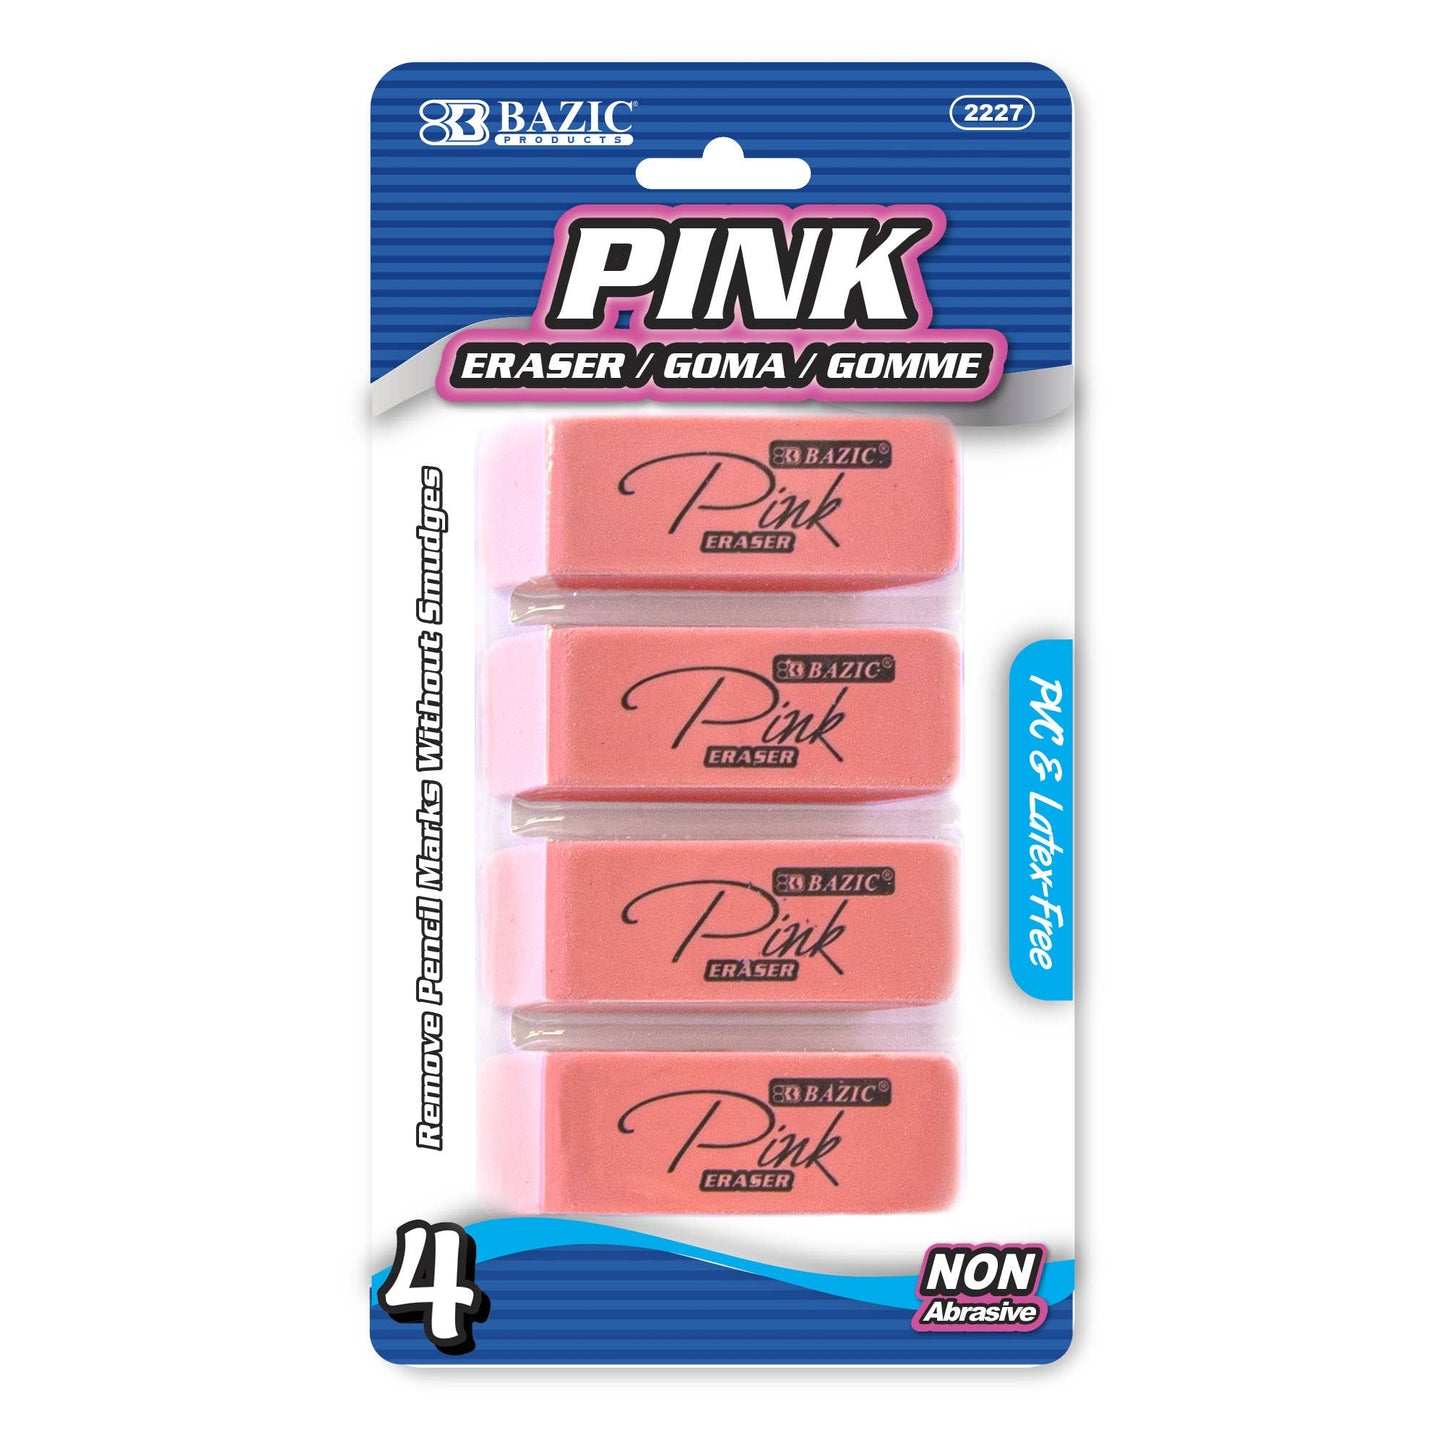 BAZIC Products - Pink Bevel Eraser (4/Pack)